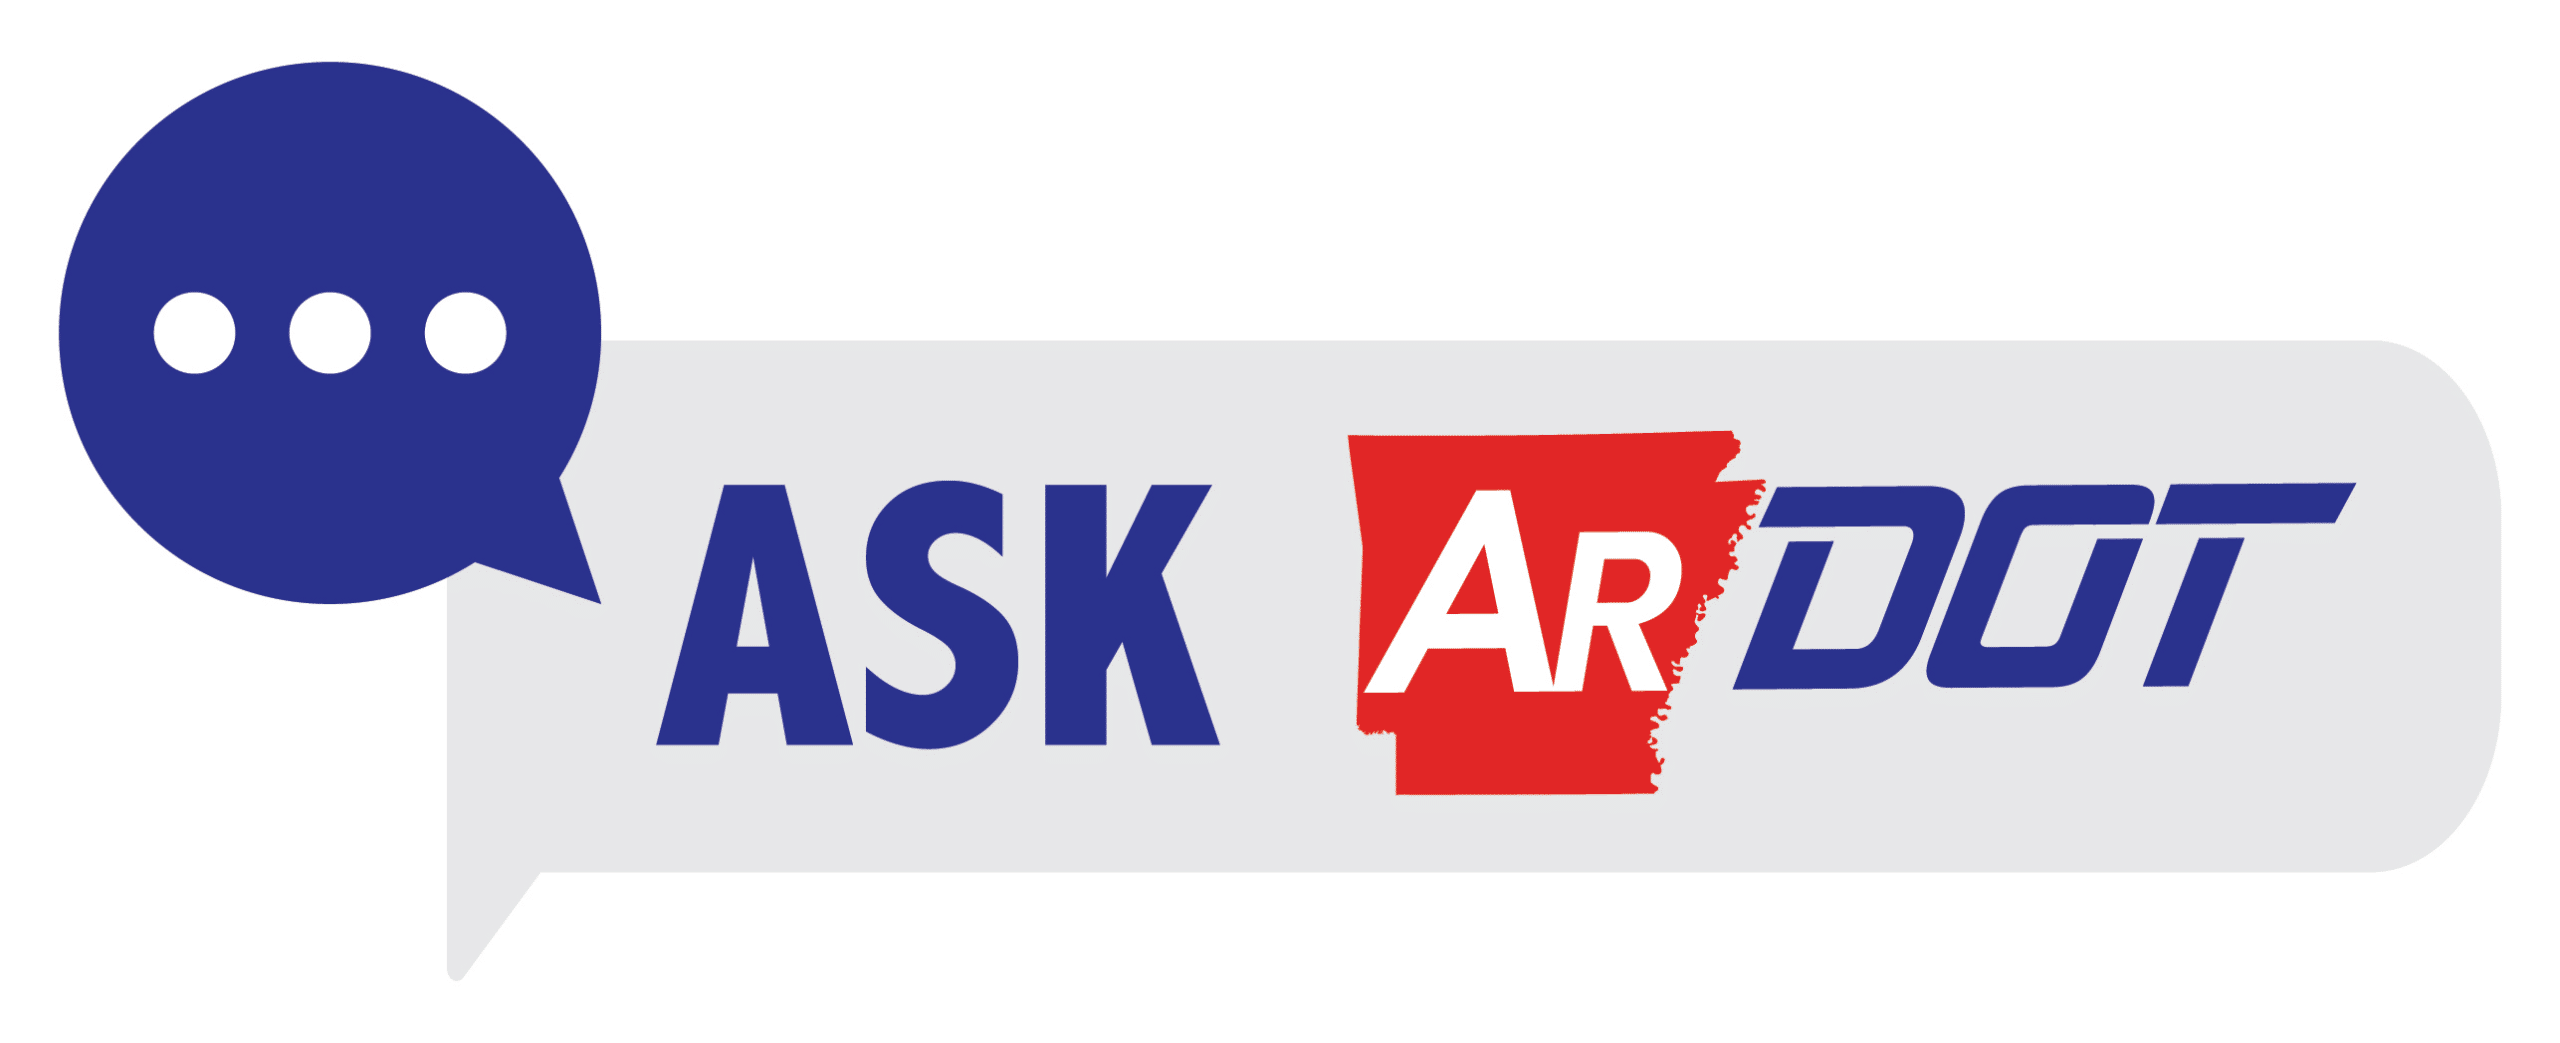 File:Ask.com Logo.svg - Wikipedia